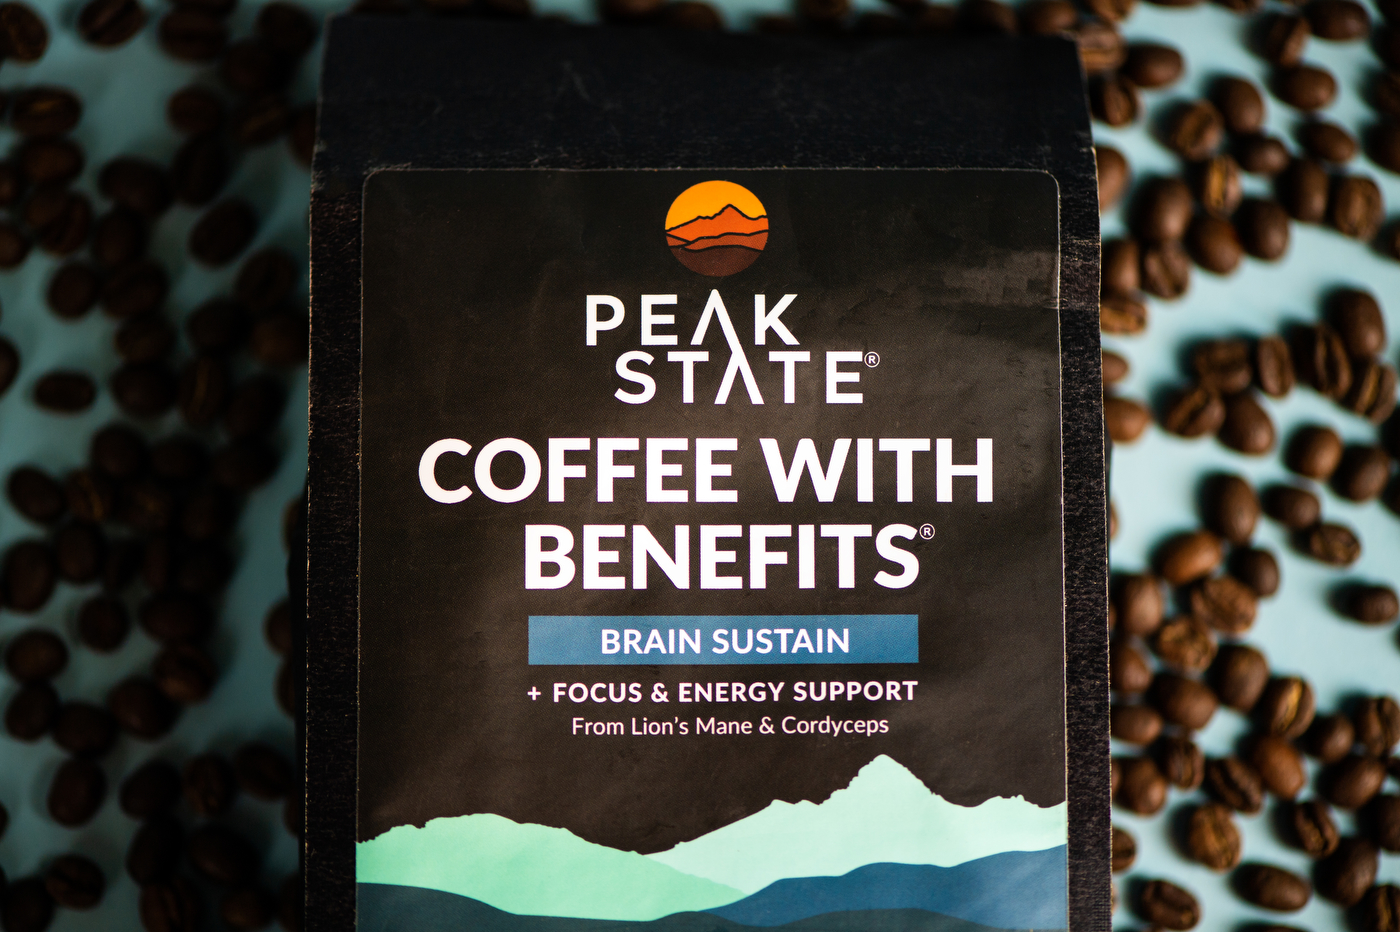 A bag of Peak State Coffee beans.